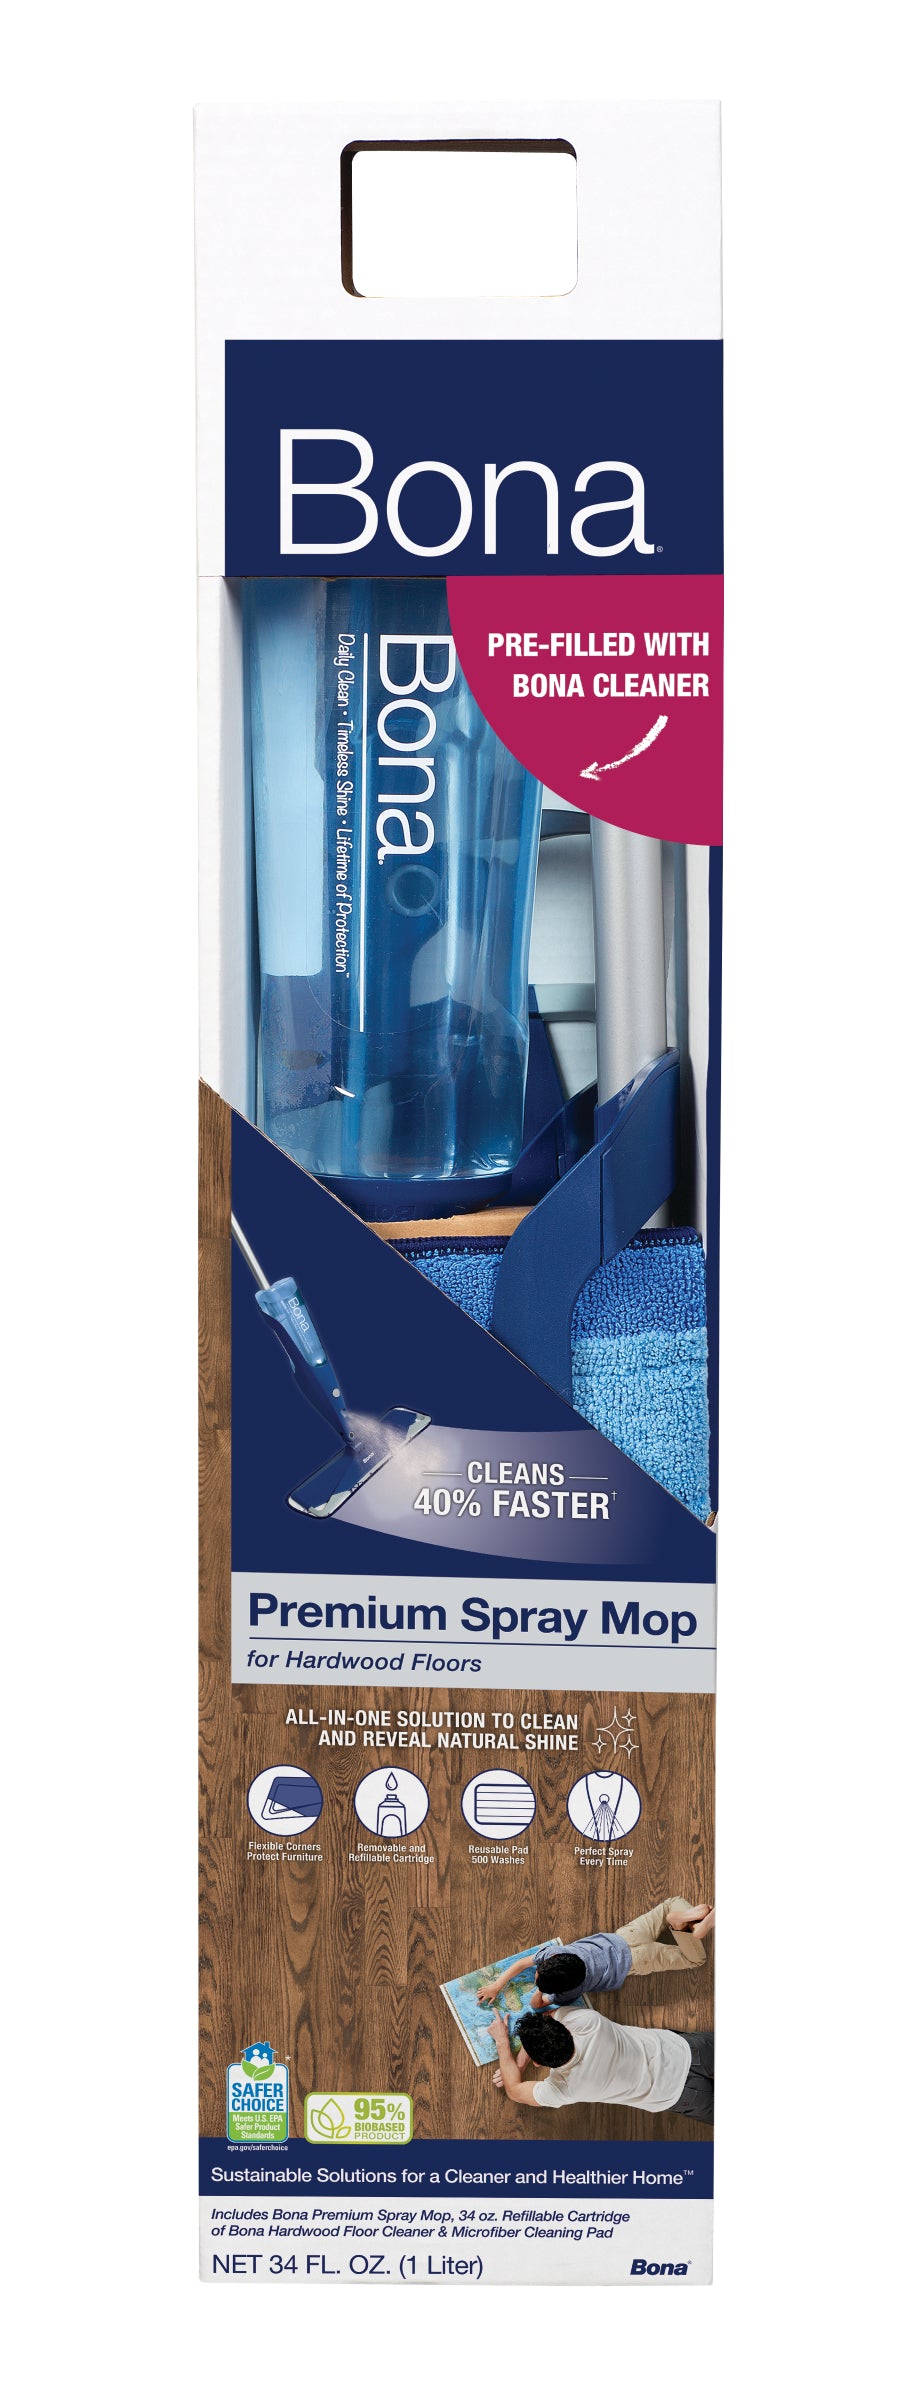 Bona Premium Spray Mop